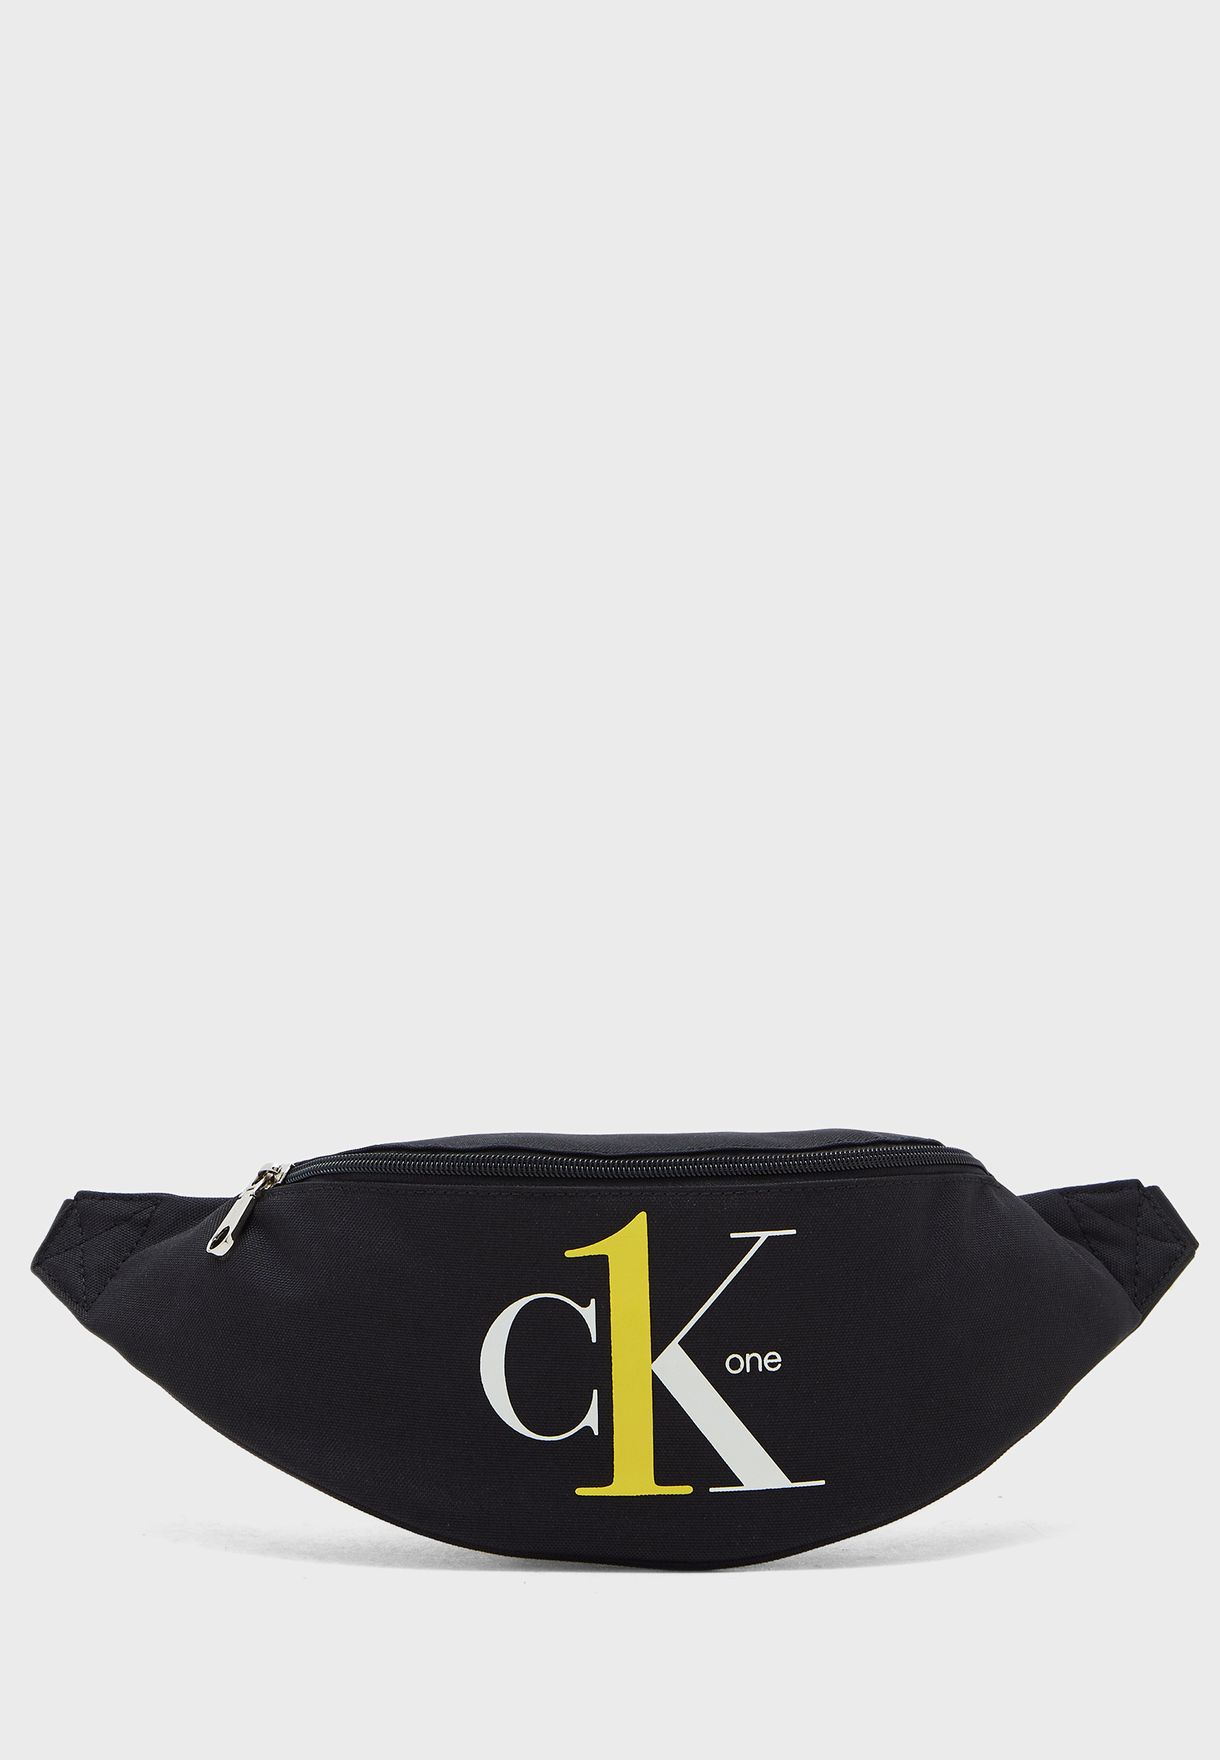 CK One Logo Messenger Bag